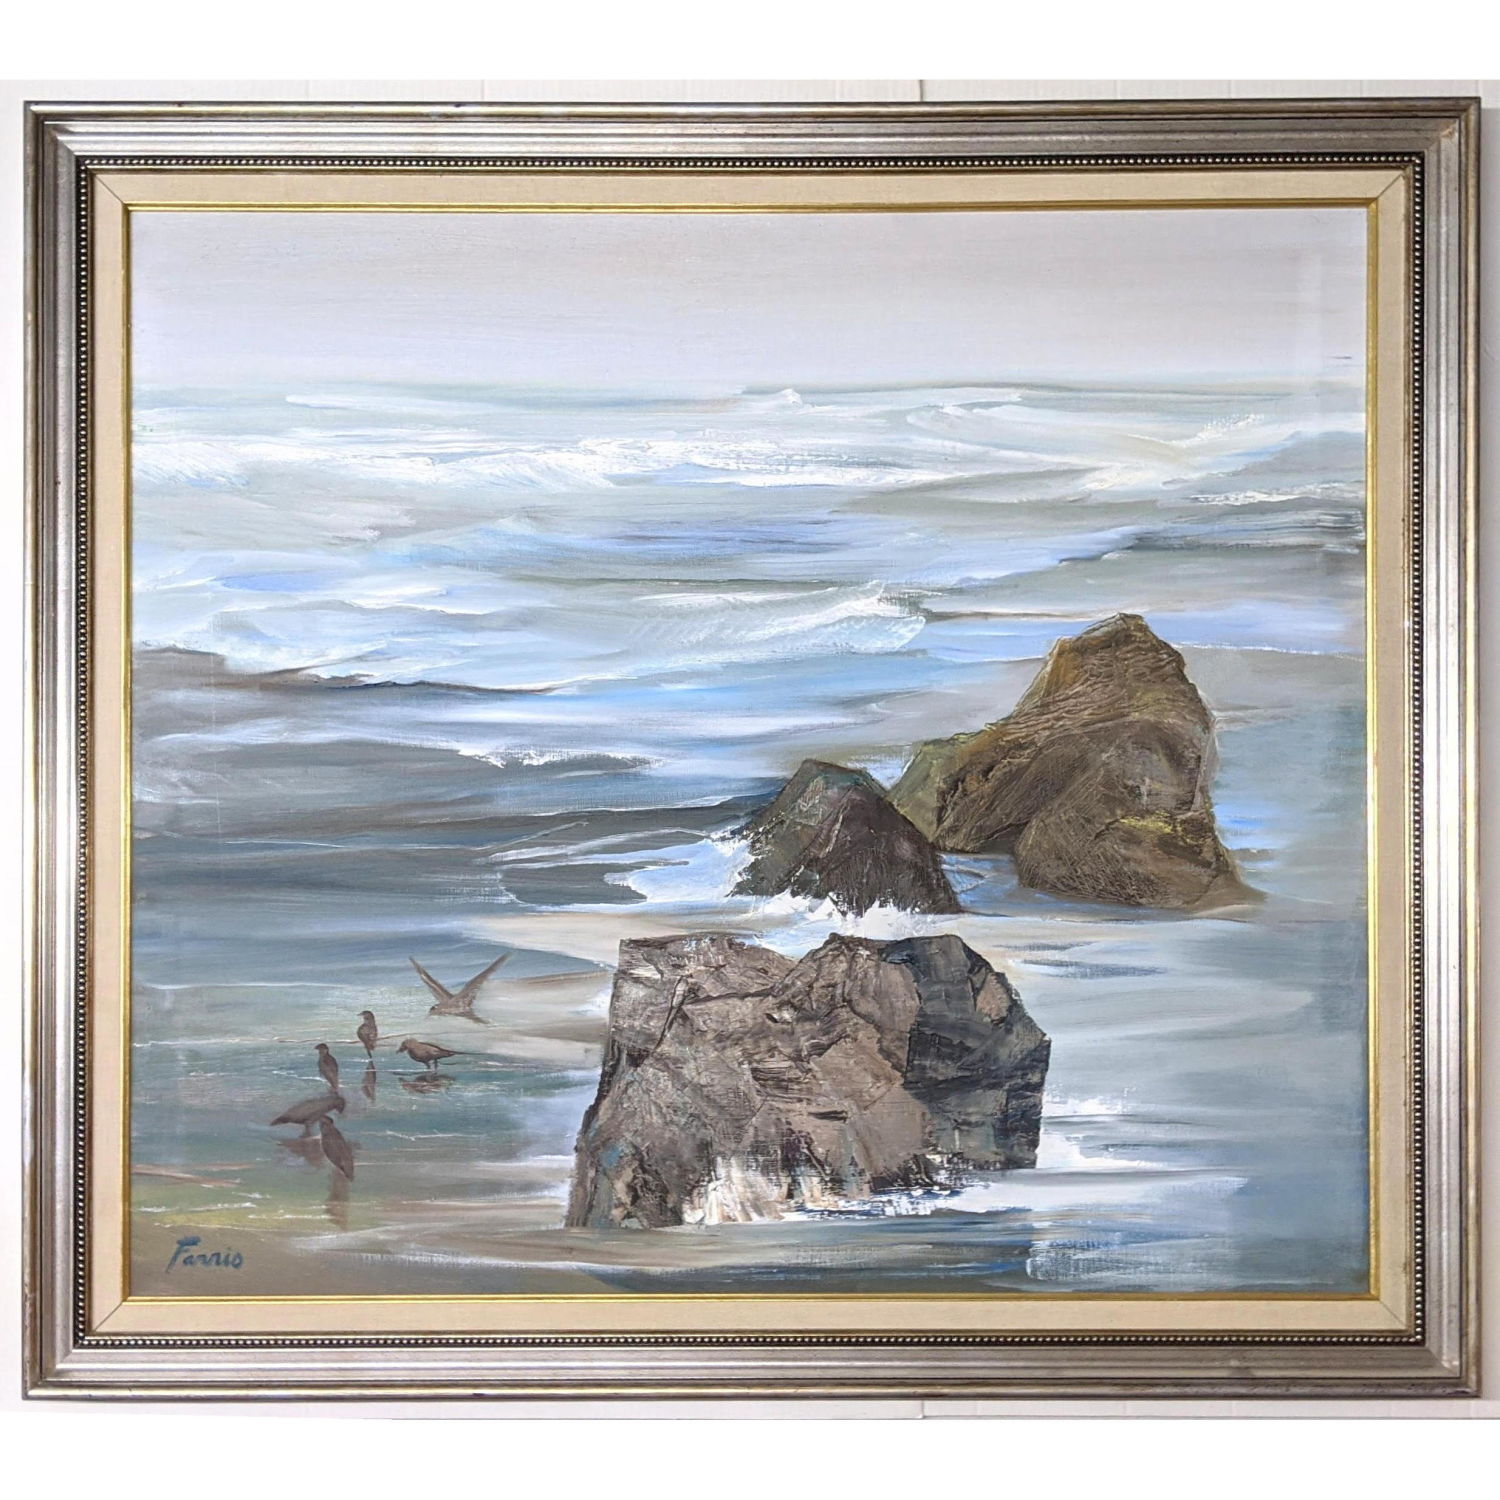 FARRIS Rocky Beach Painting on 2ff51b